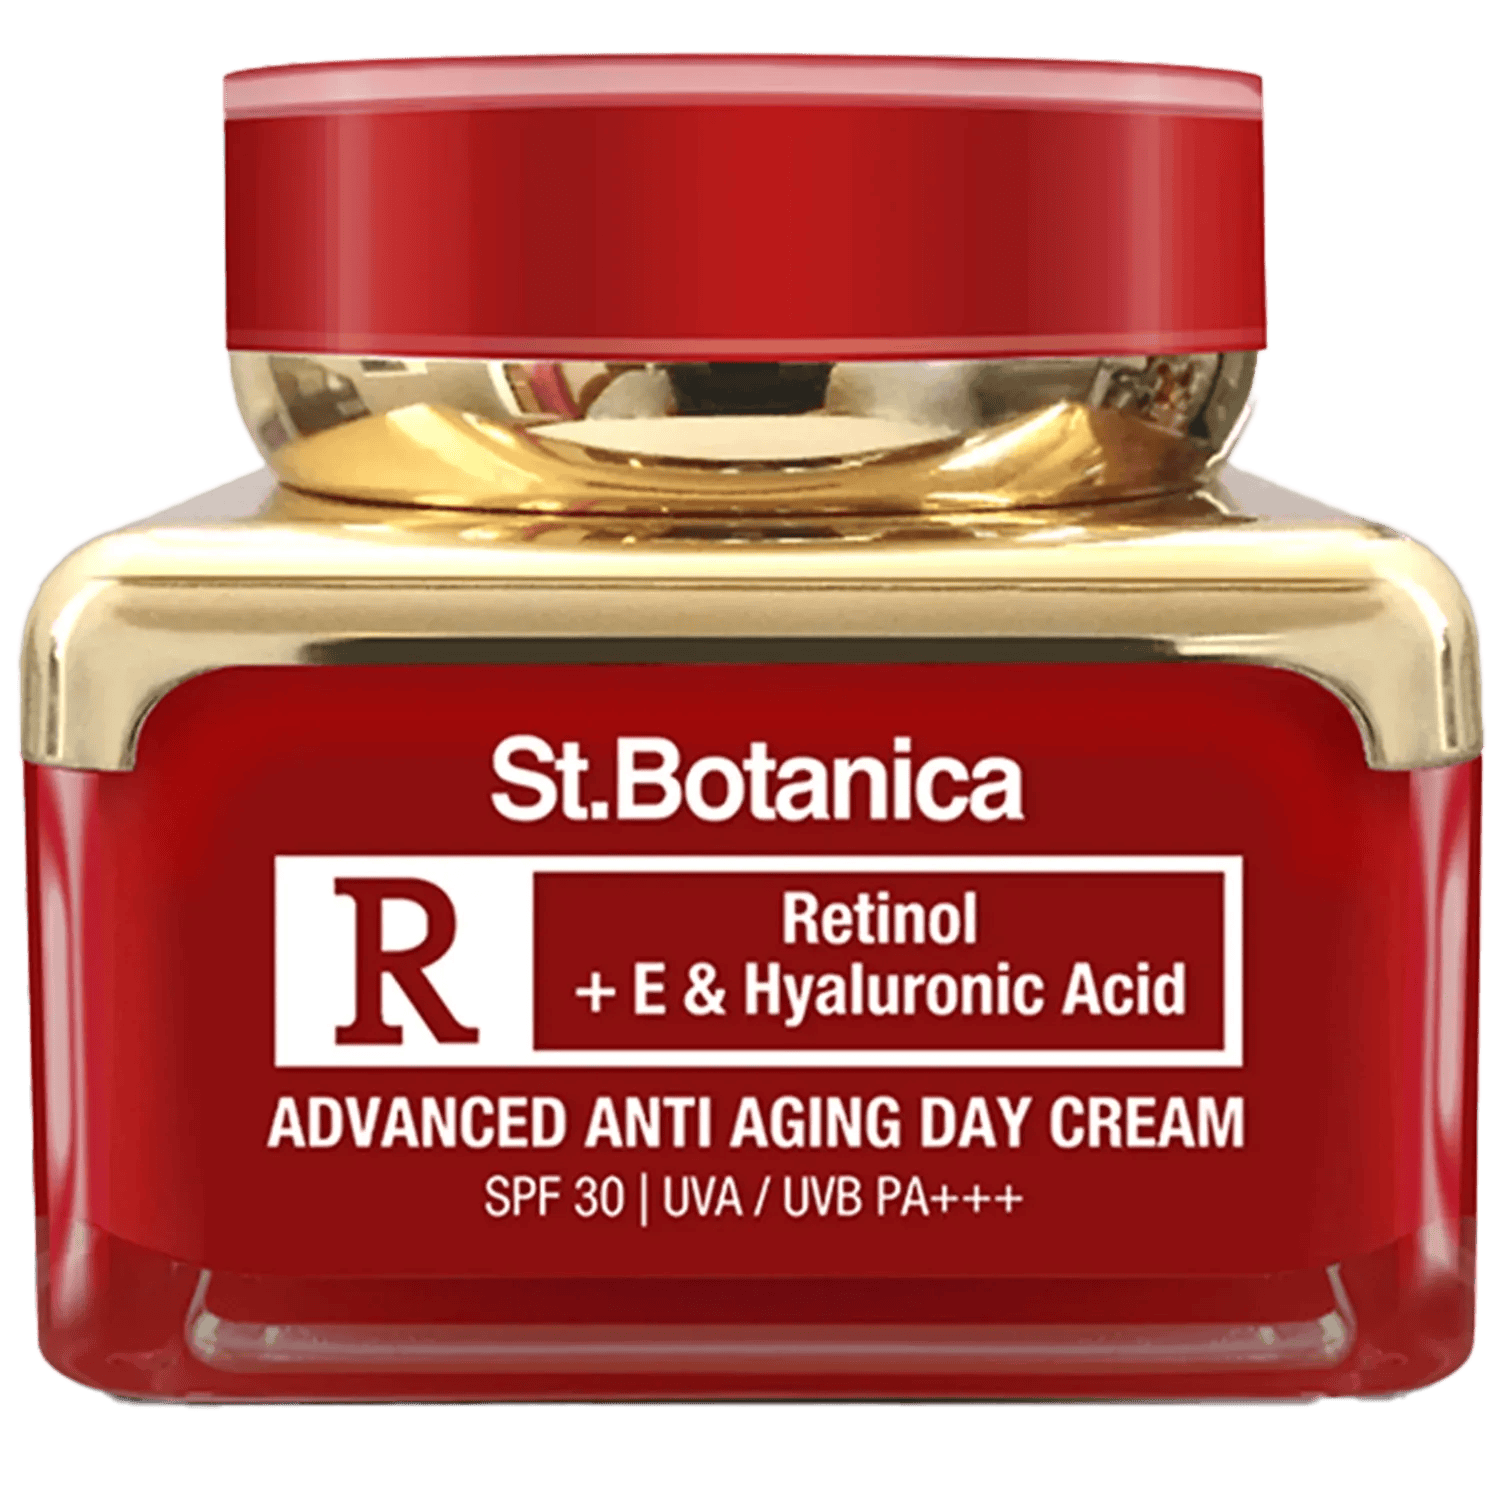 St.Botanica | St.Botanica Retinol Advanced Anti-Aging Day Cream SPF 30 Pa+++ - (50g)